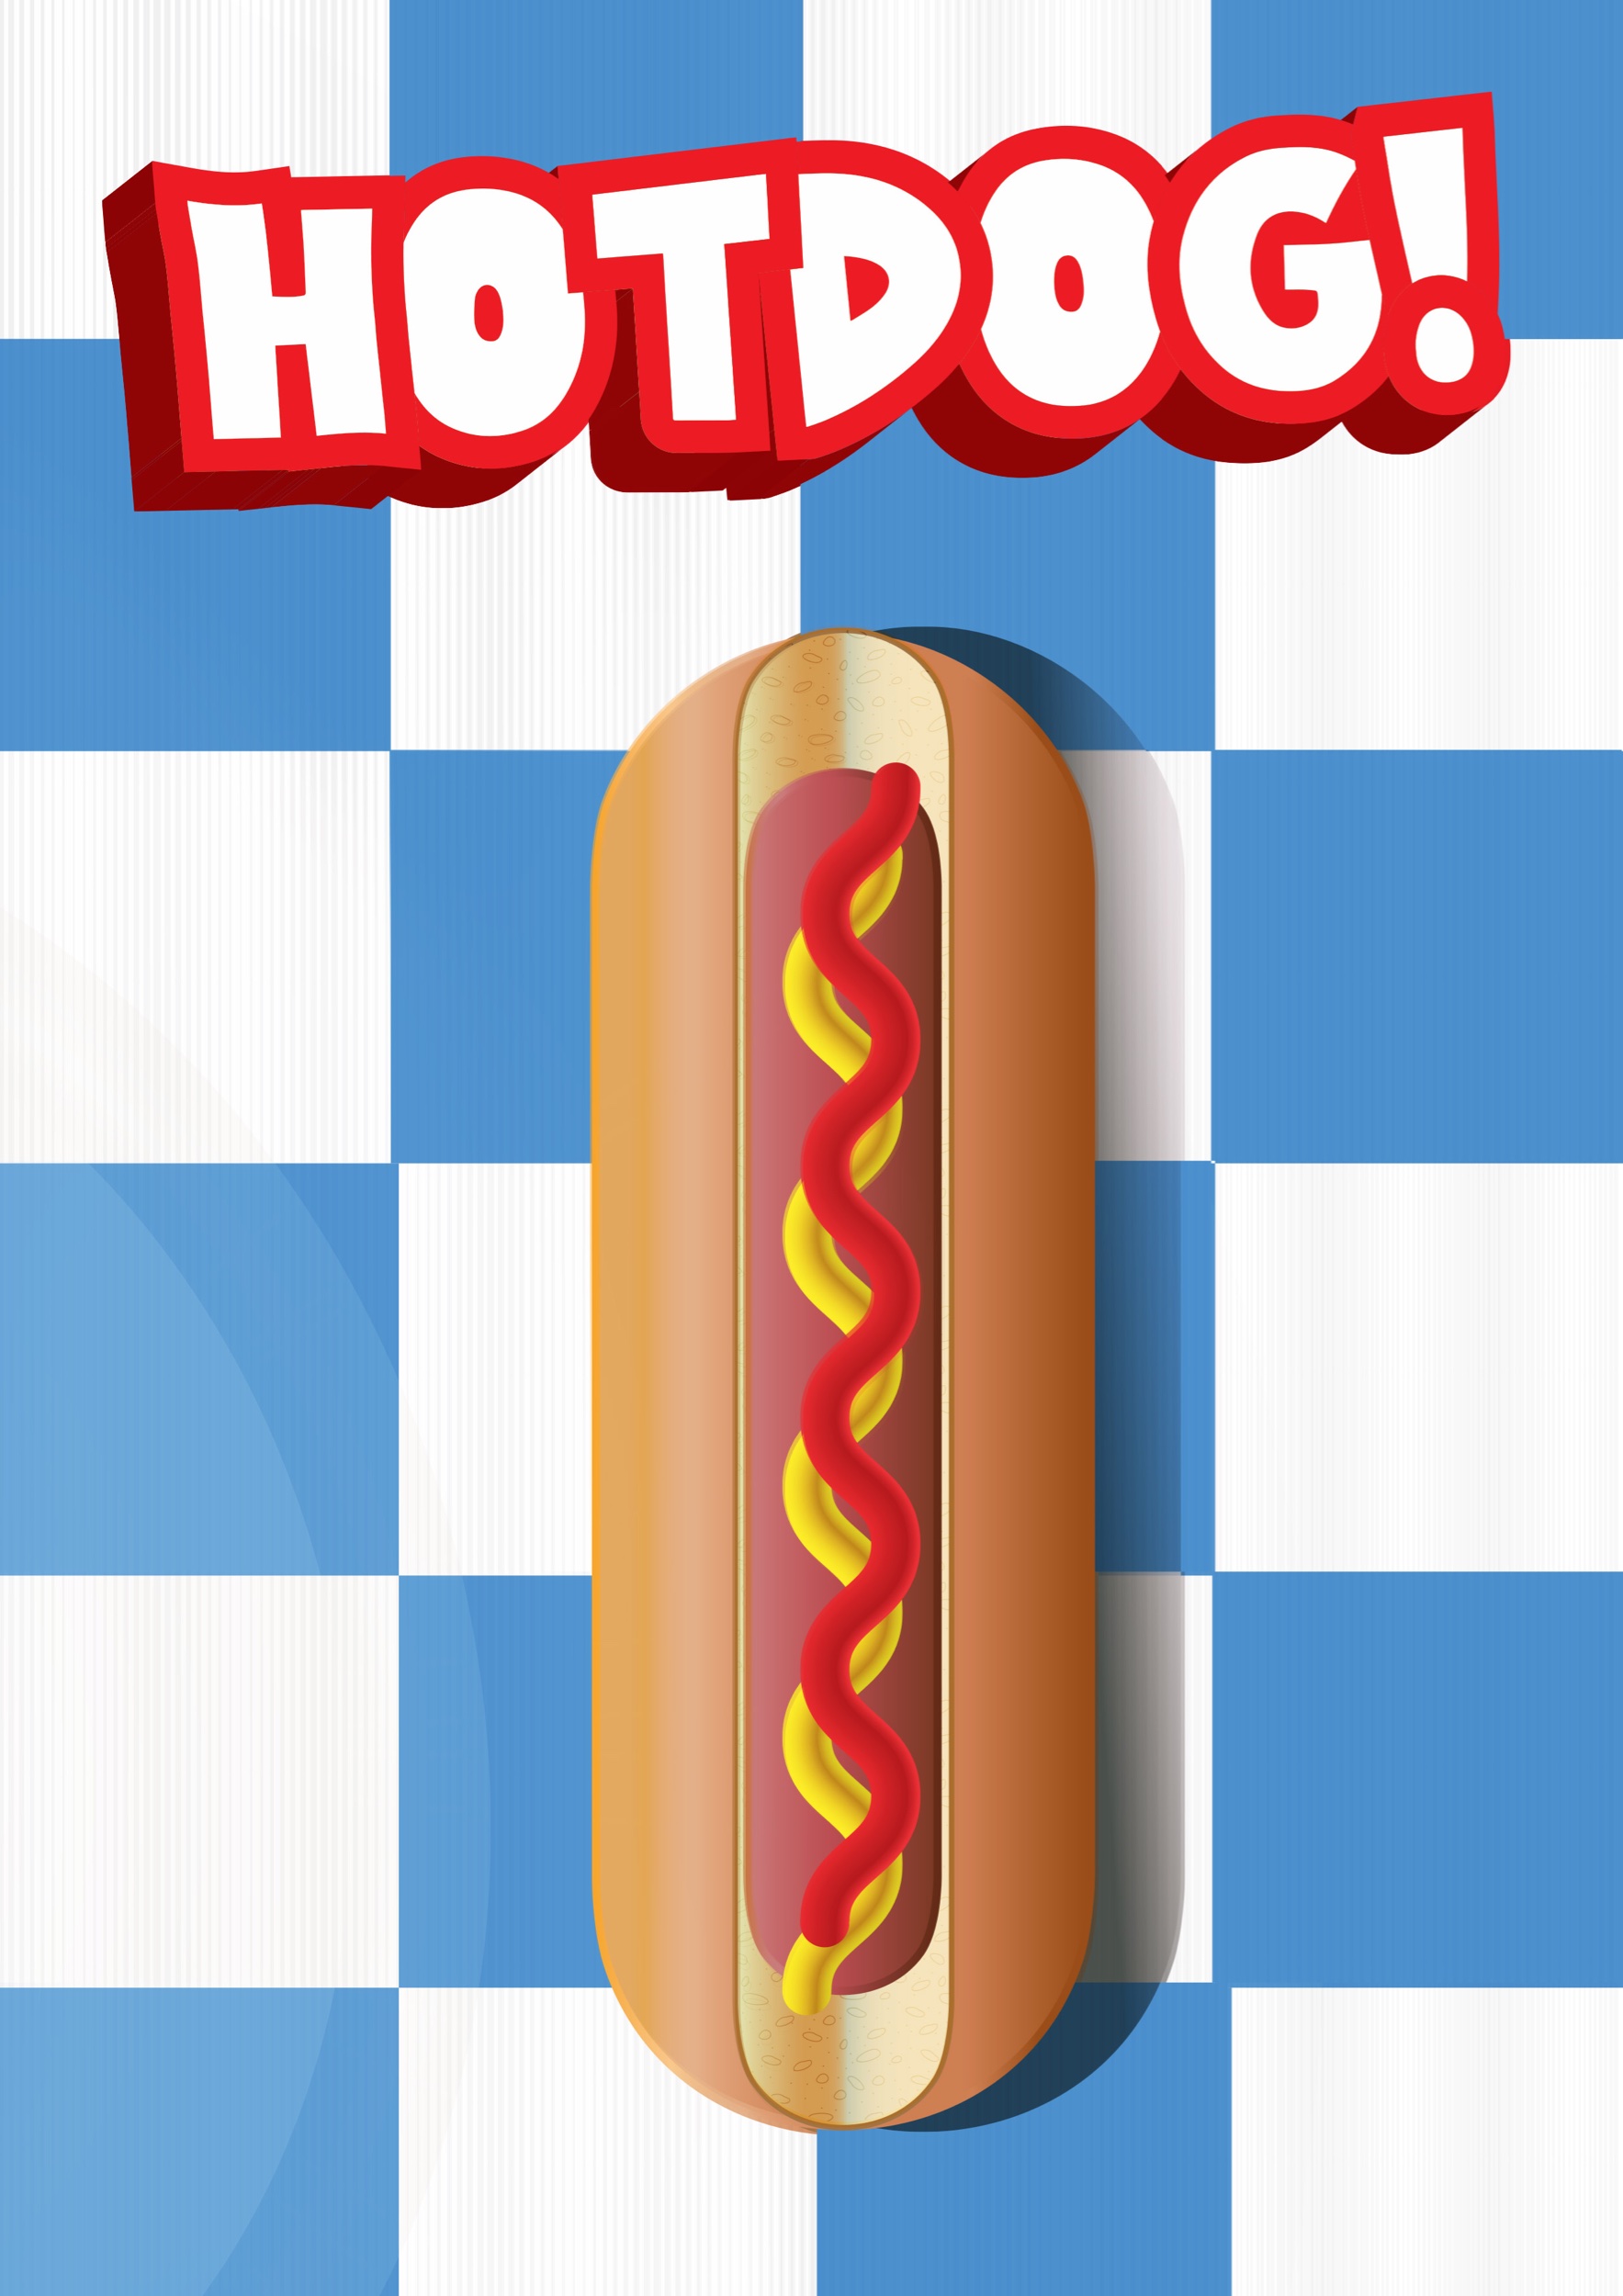 hotdogs.jpeg